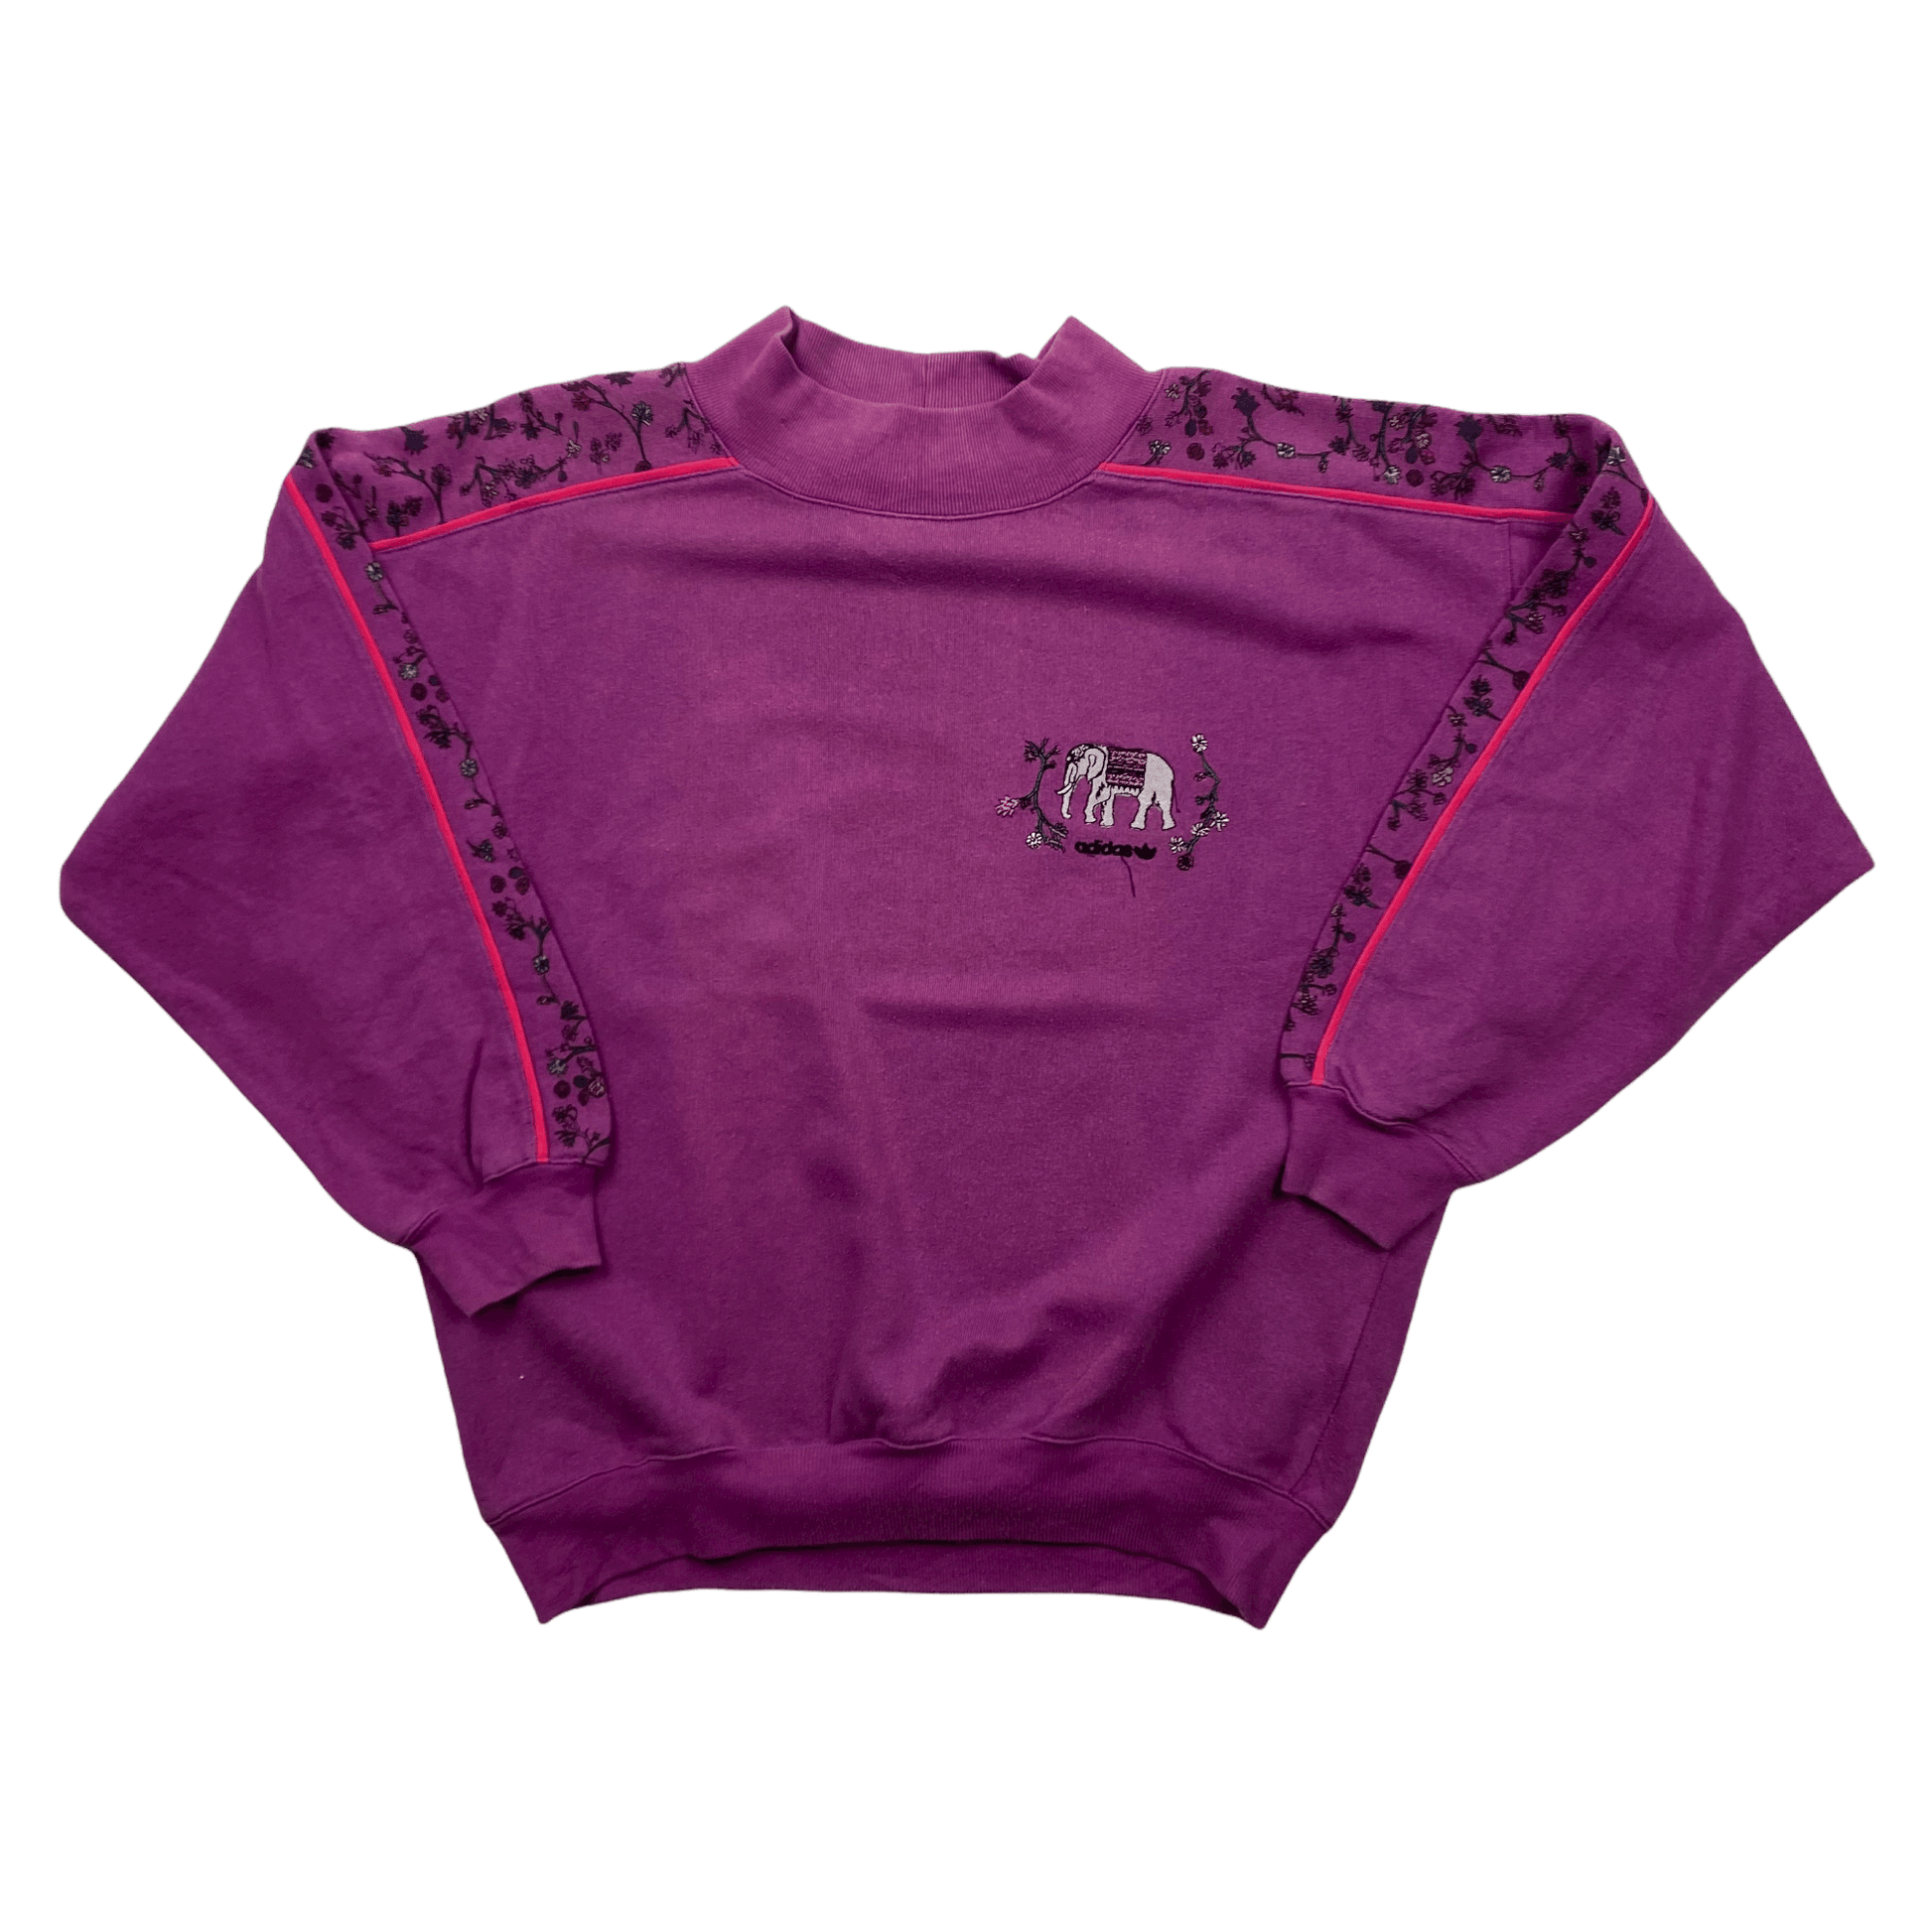 Vintage 90s Women’s Purple Adidas Spell-Out Sweatshirt - Medium - The Streetwear Studio